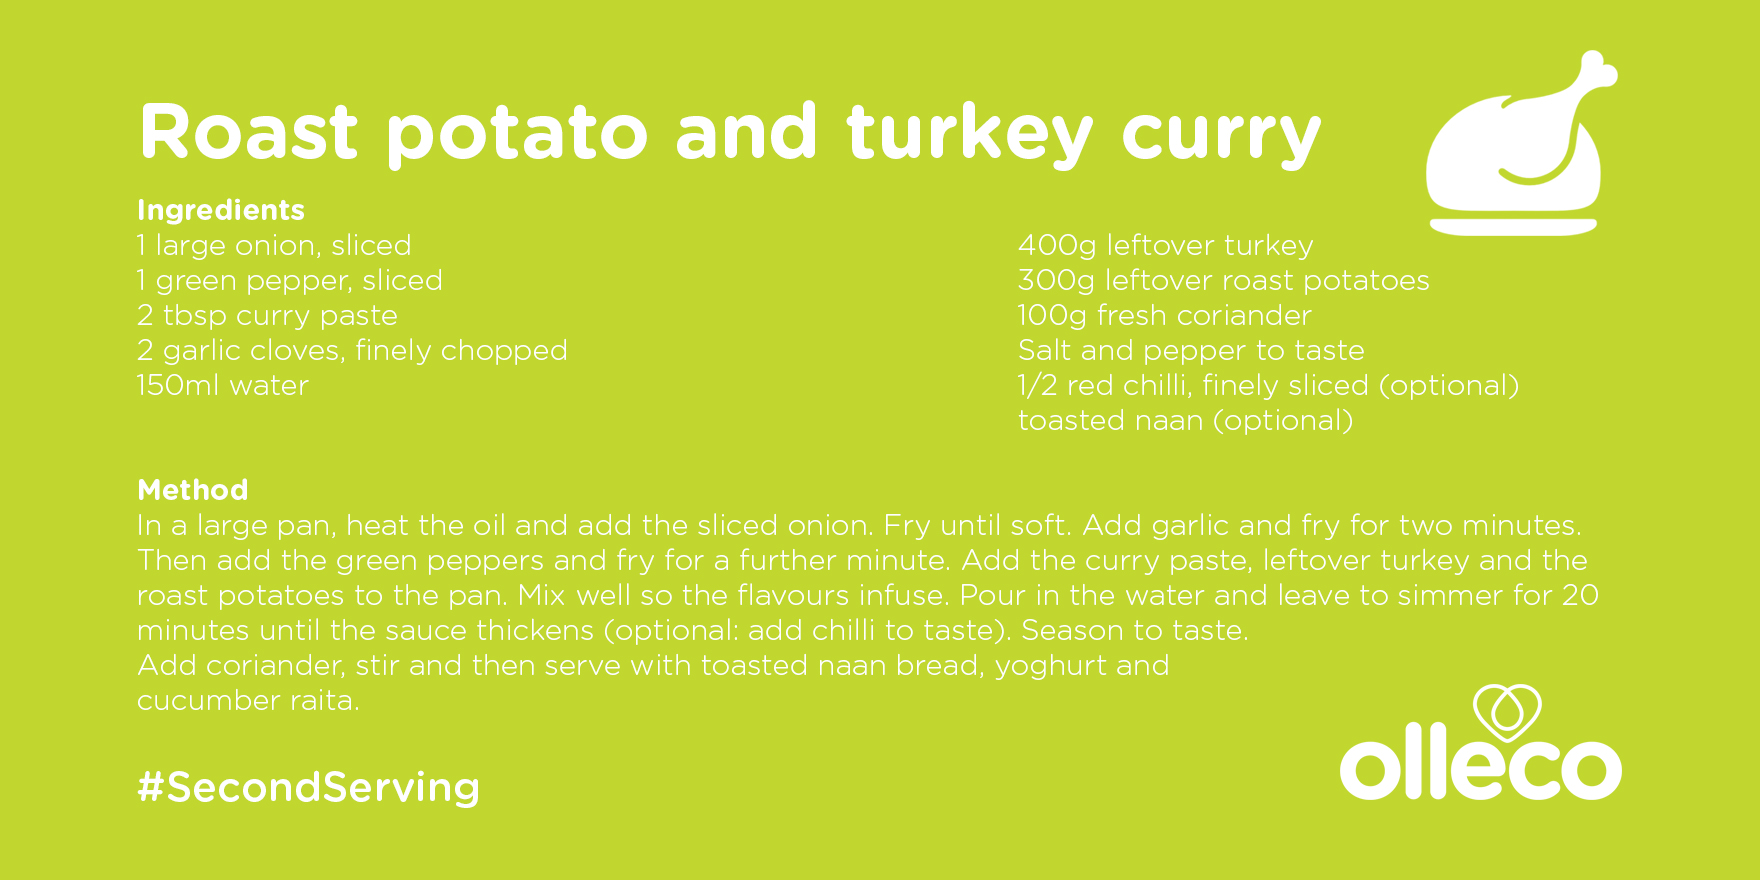 Roast potato and turkey curry recipe